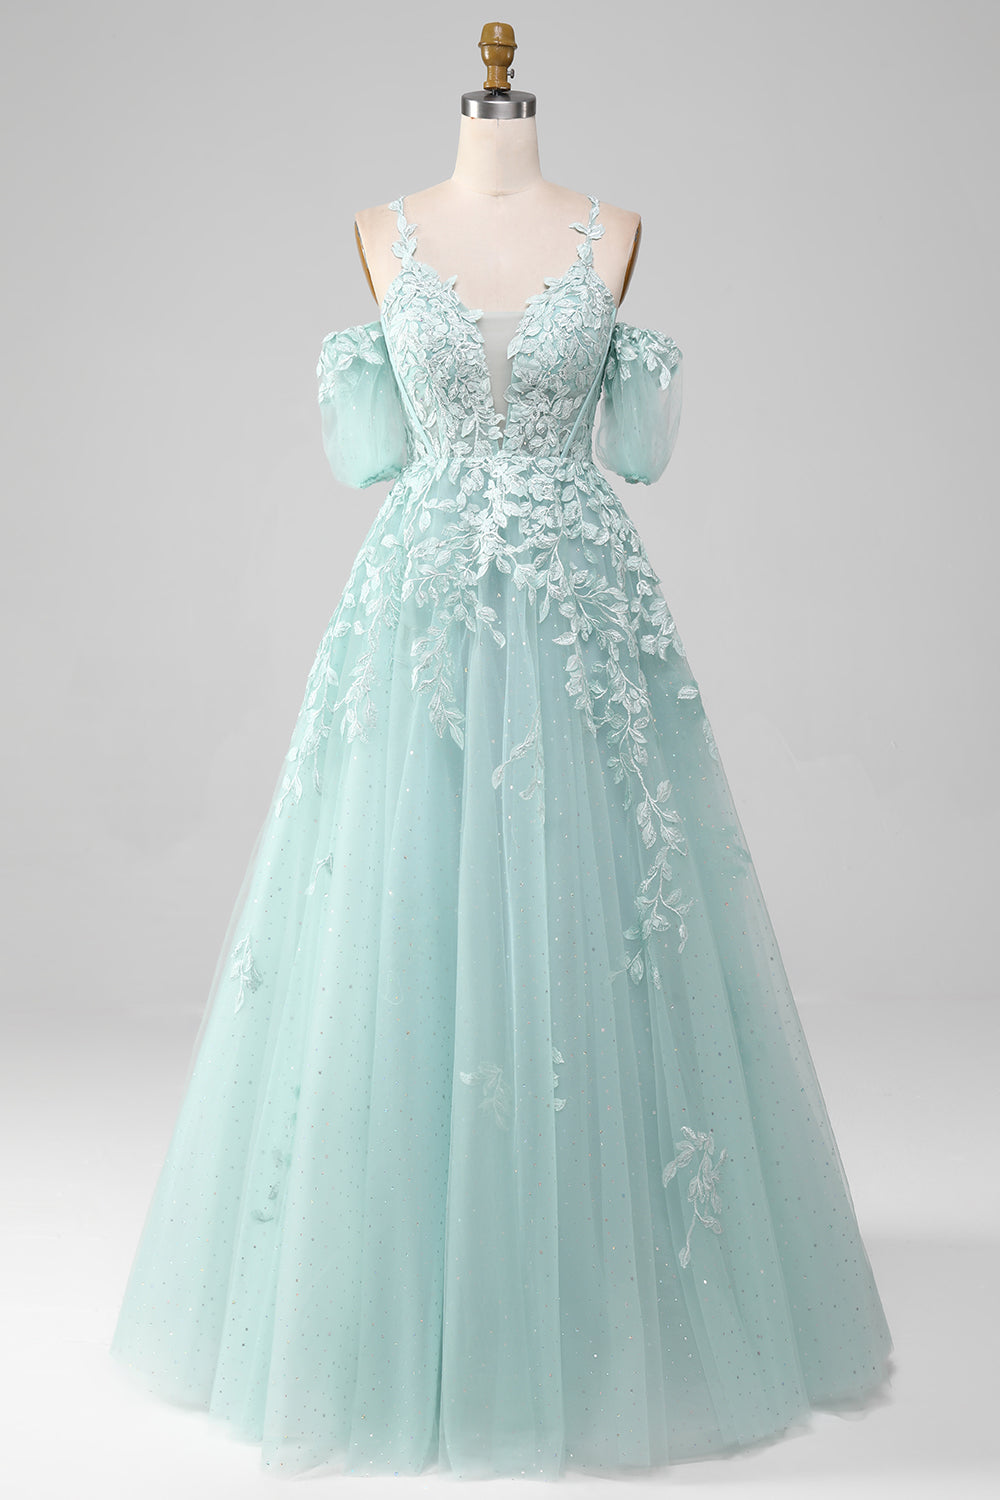 Mint Ball-kjole Off The Shoulder Beaded Prom kjoler med applikationer